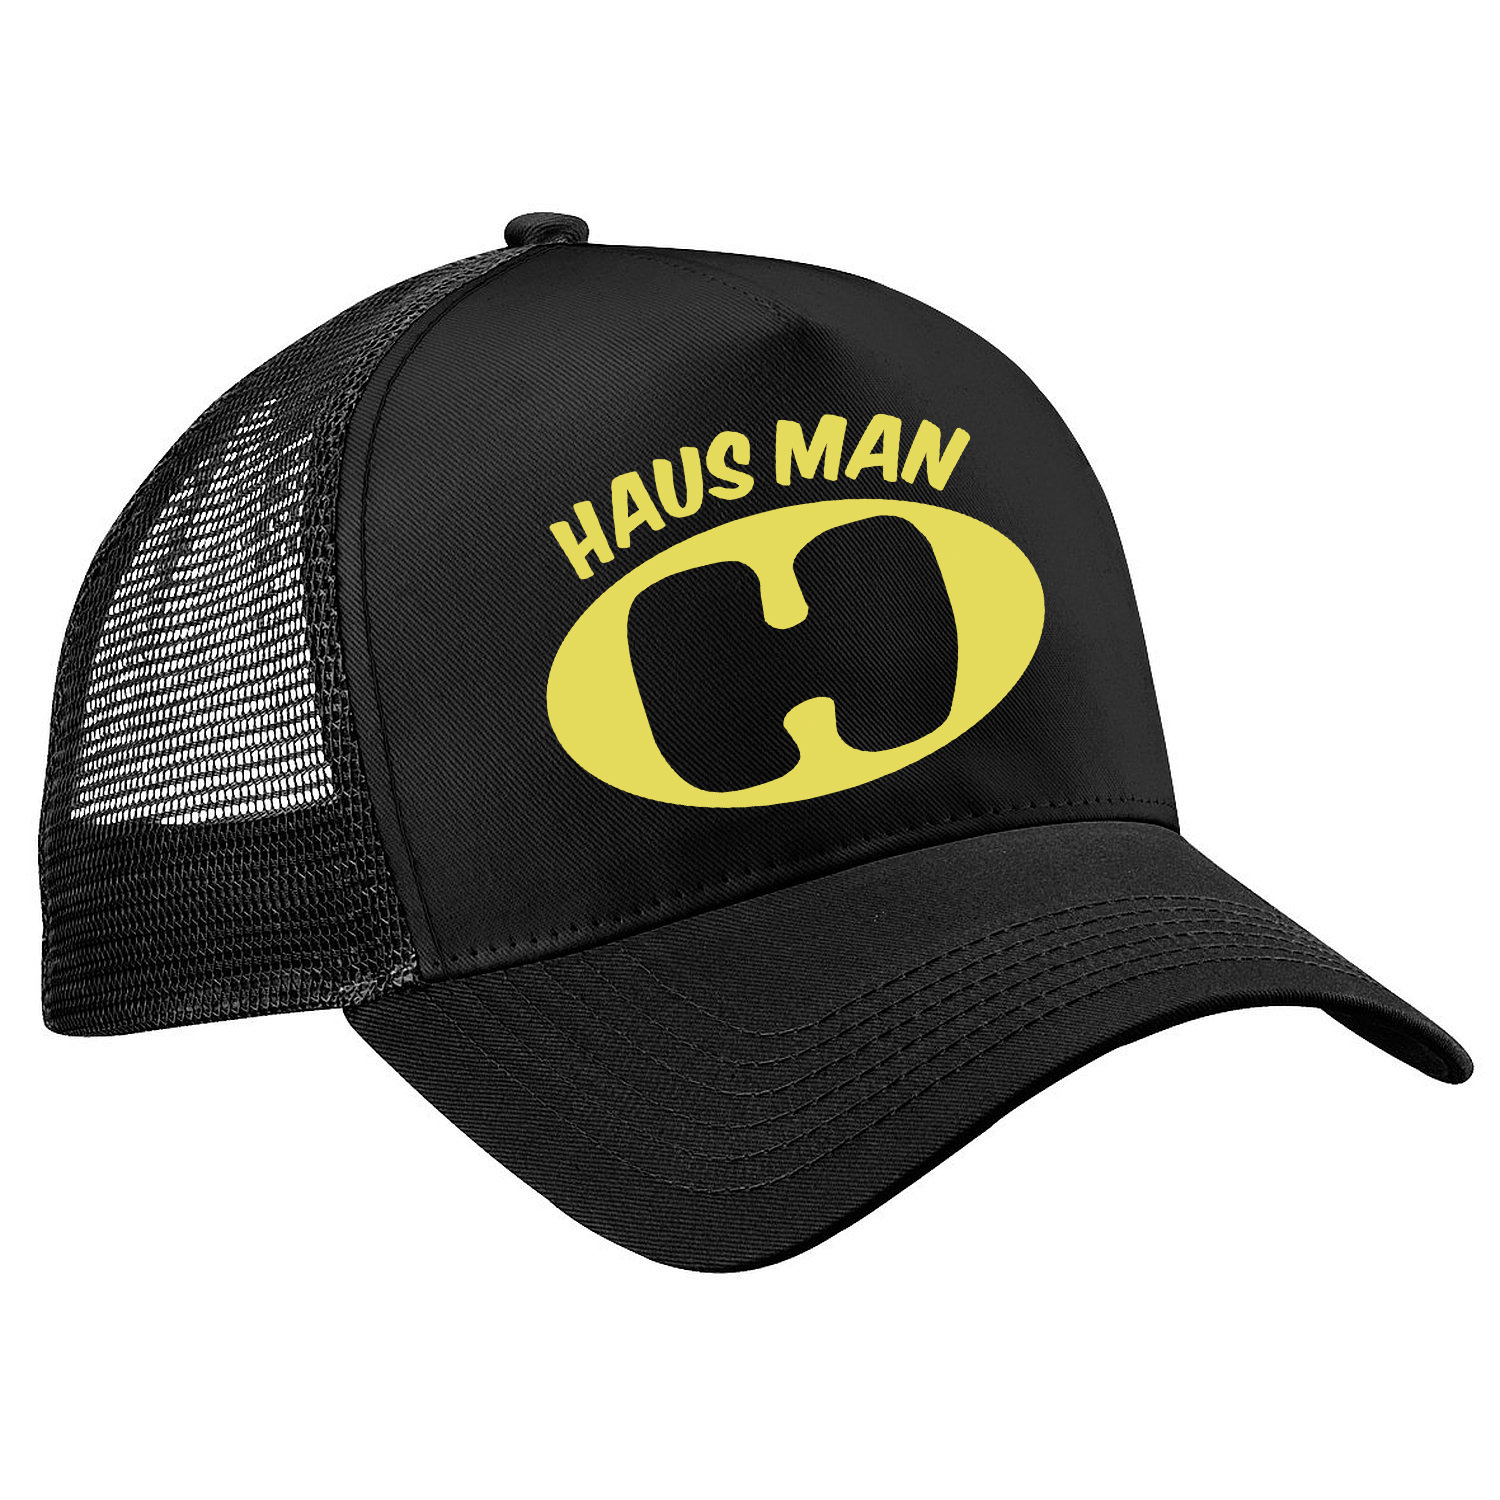 Superhero-Cap "Haus Man"